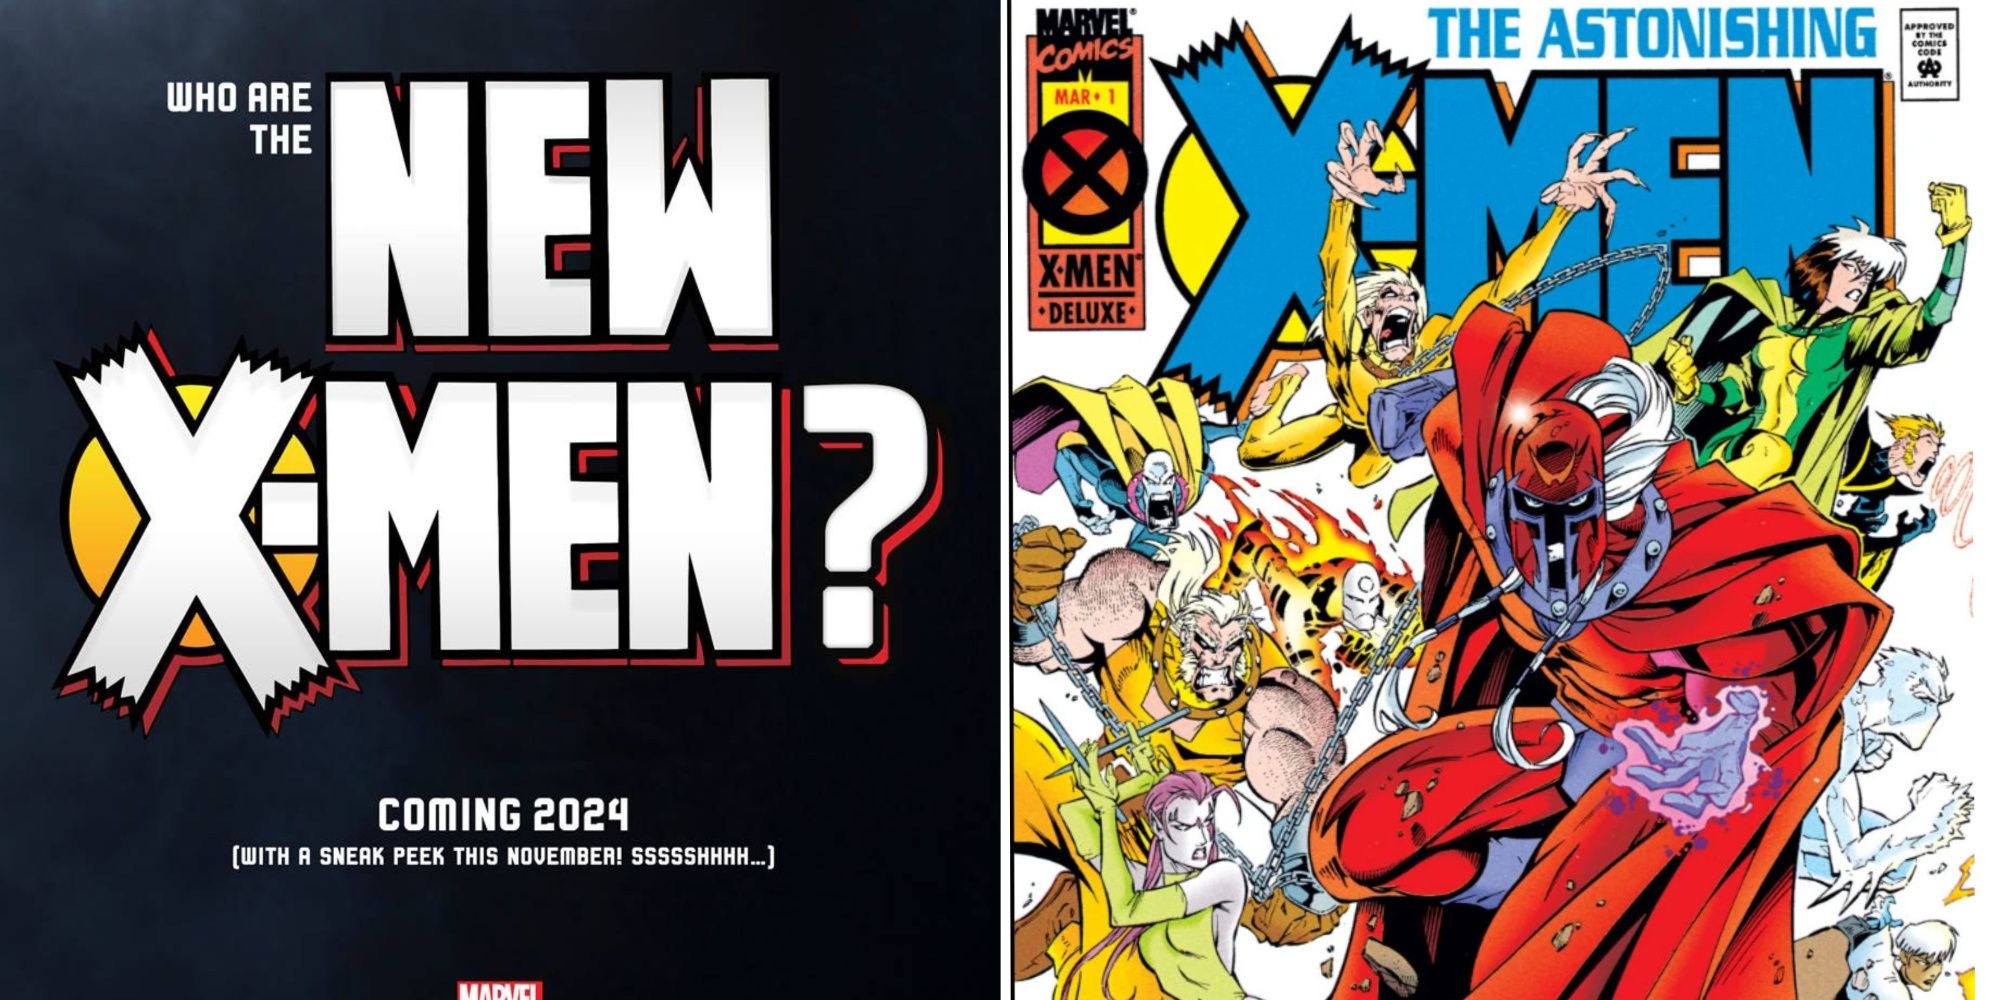 A split image of Marvel's 